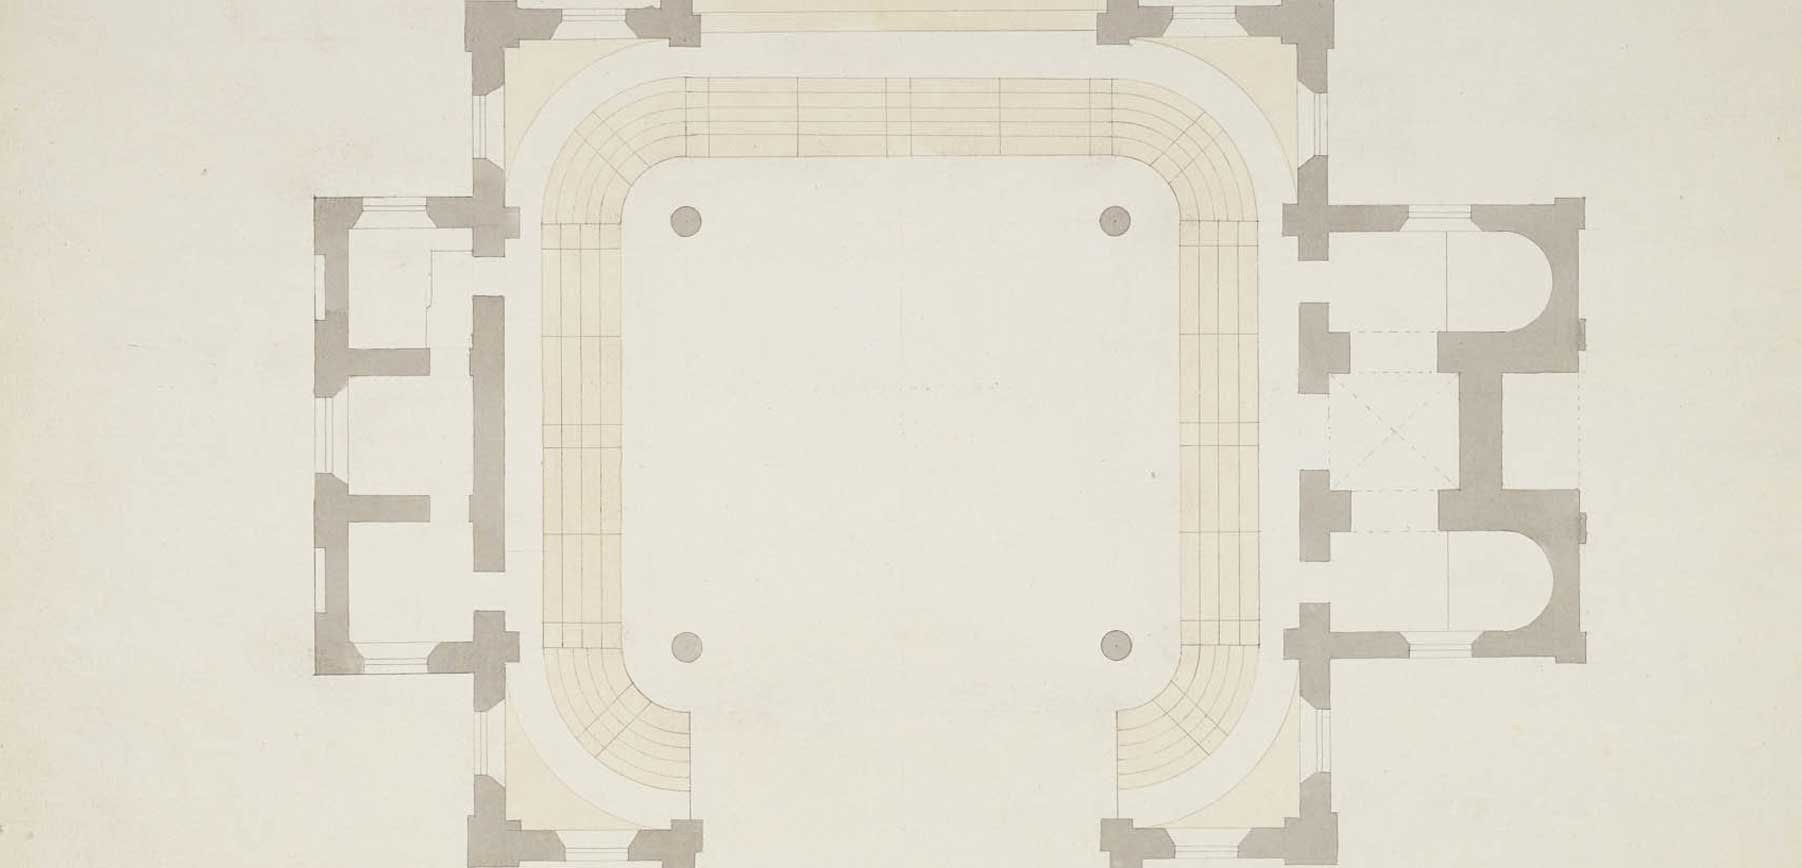 James Spiller's original floor plan for the new Hackney Church, showing a Greek Cross. 